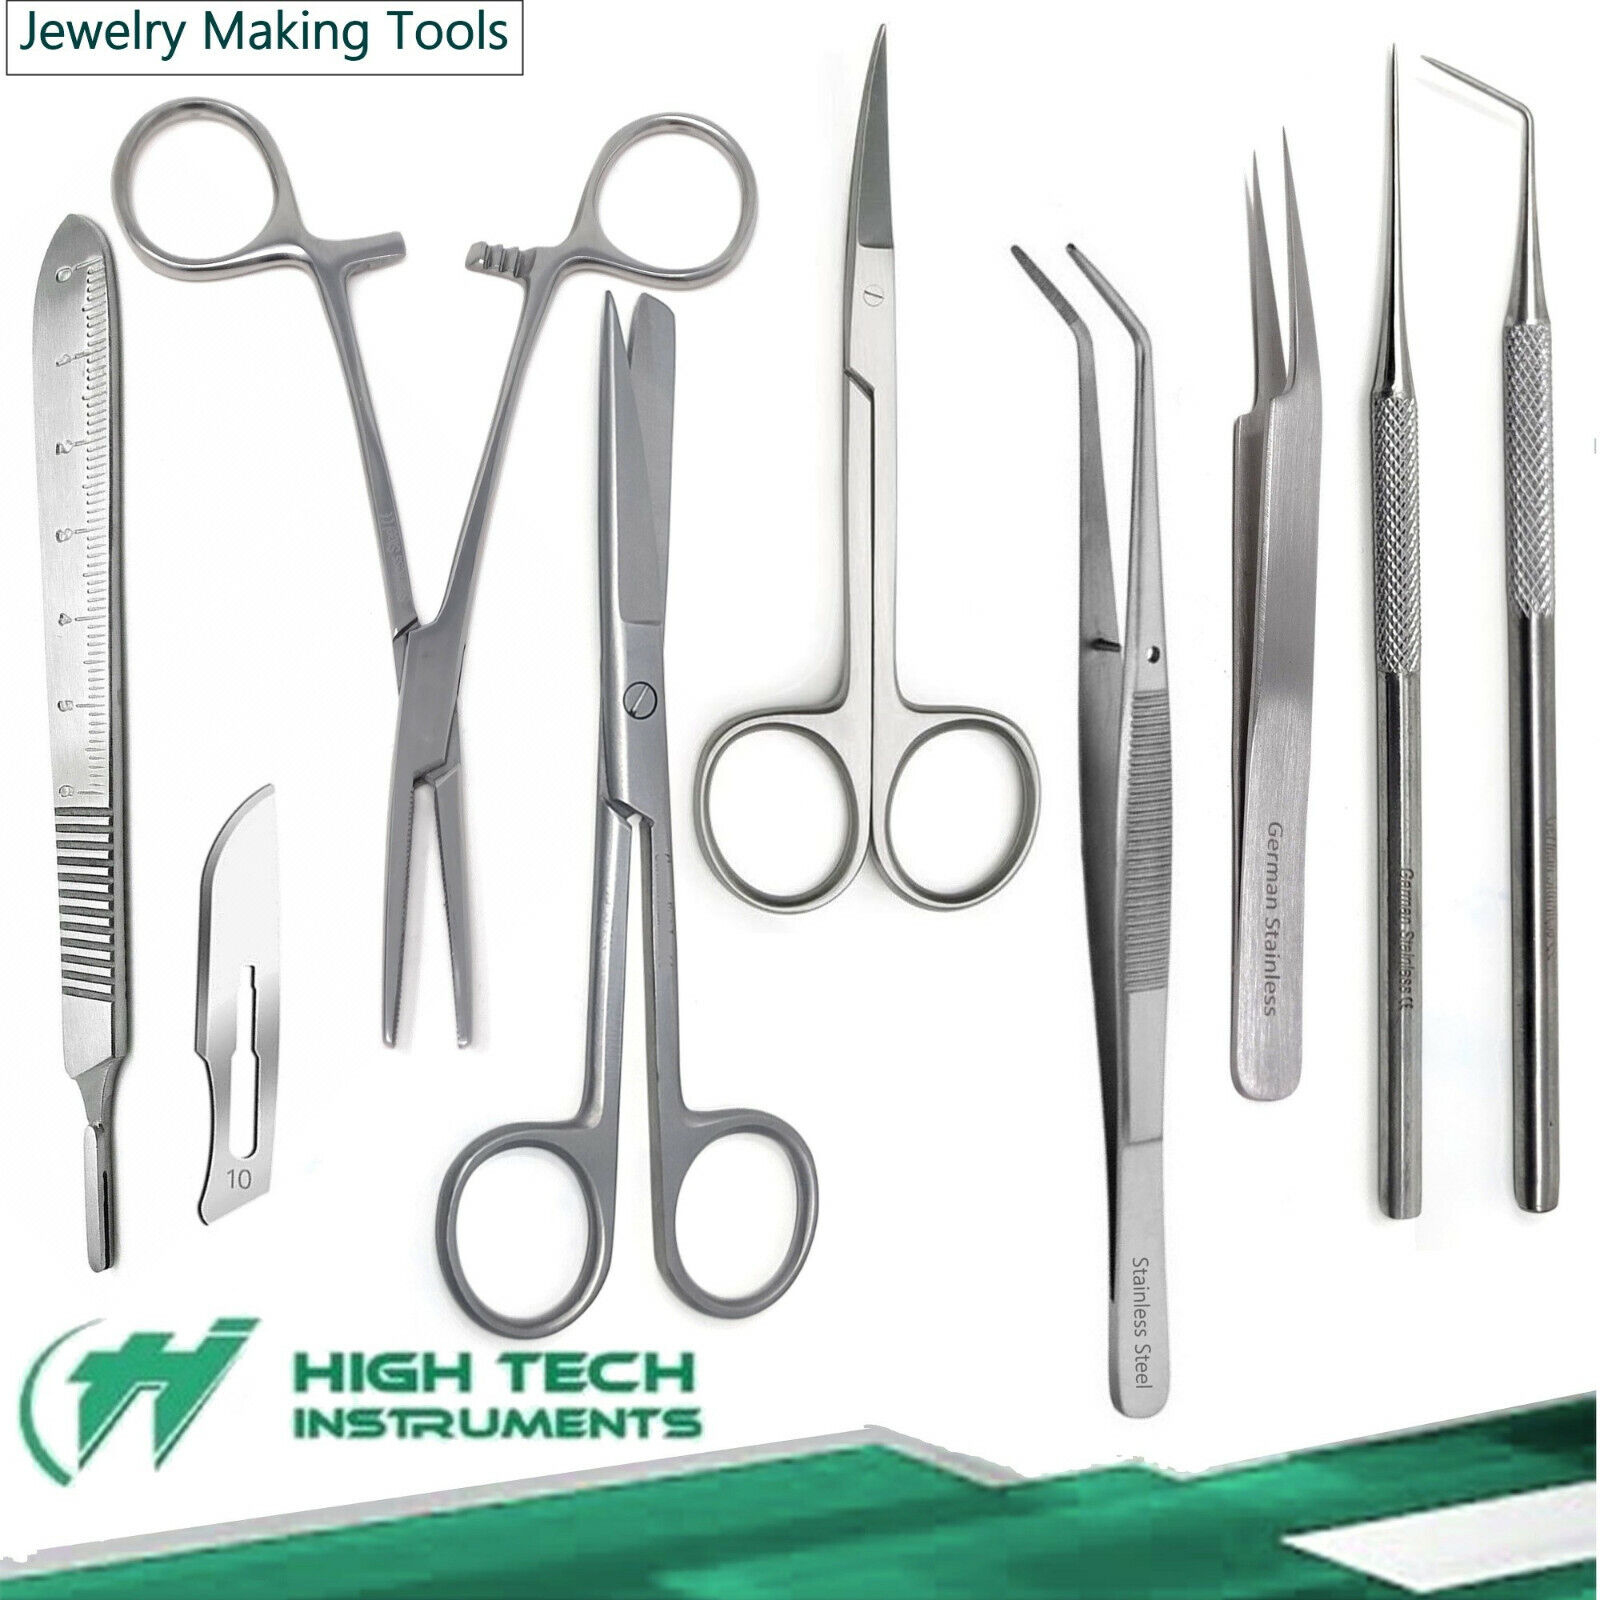 13 Pcs Jewelry Making Kit Pliers Repair Tool Craft Supplies Starter Fixing Set hti brand Does Not Apply